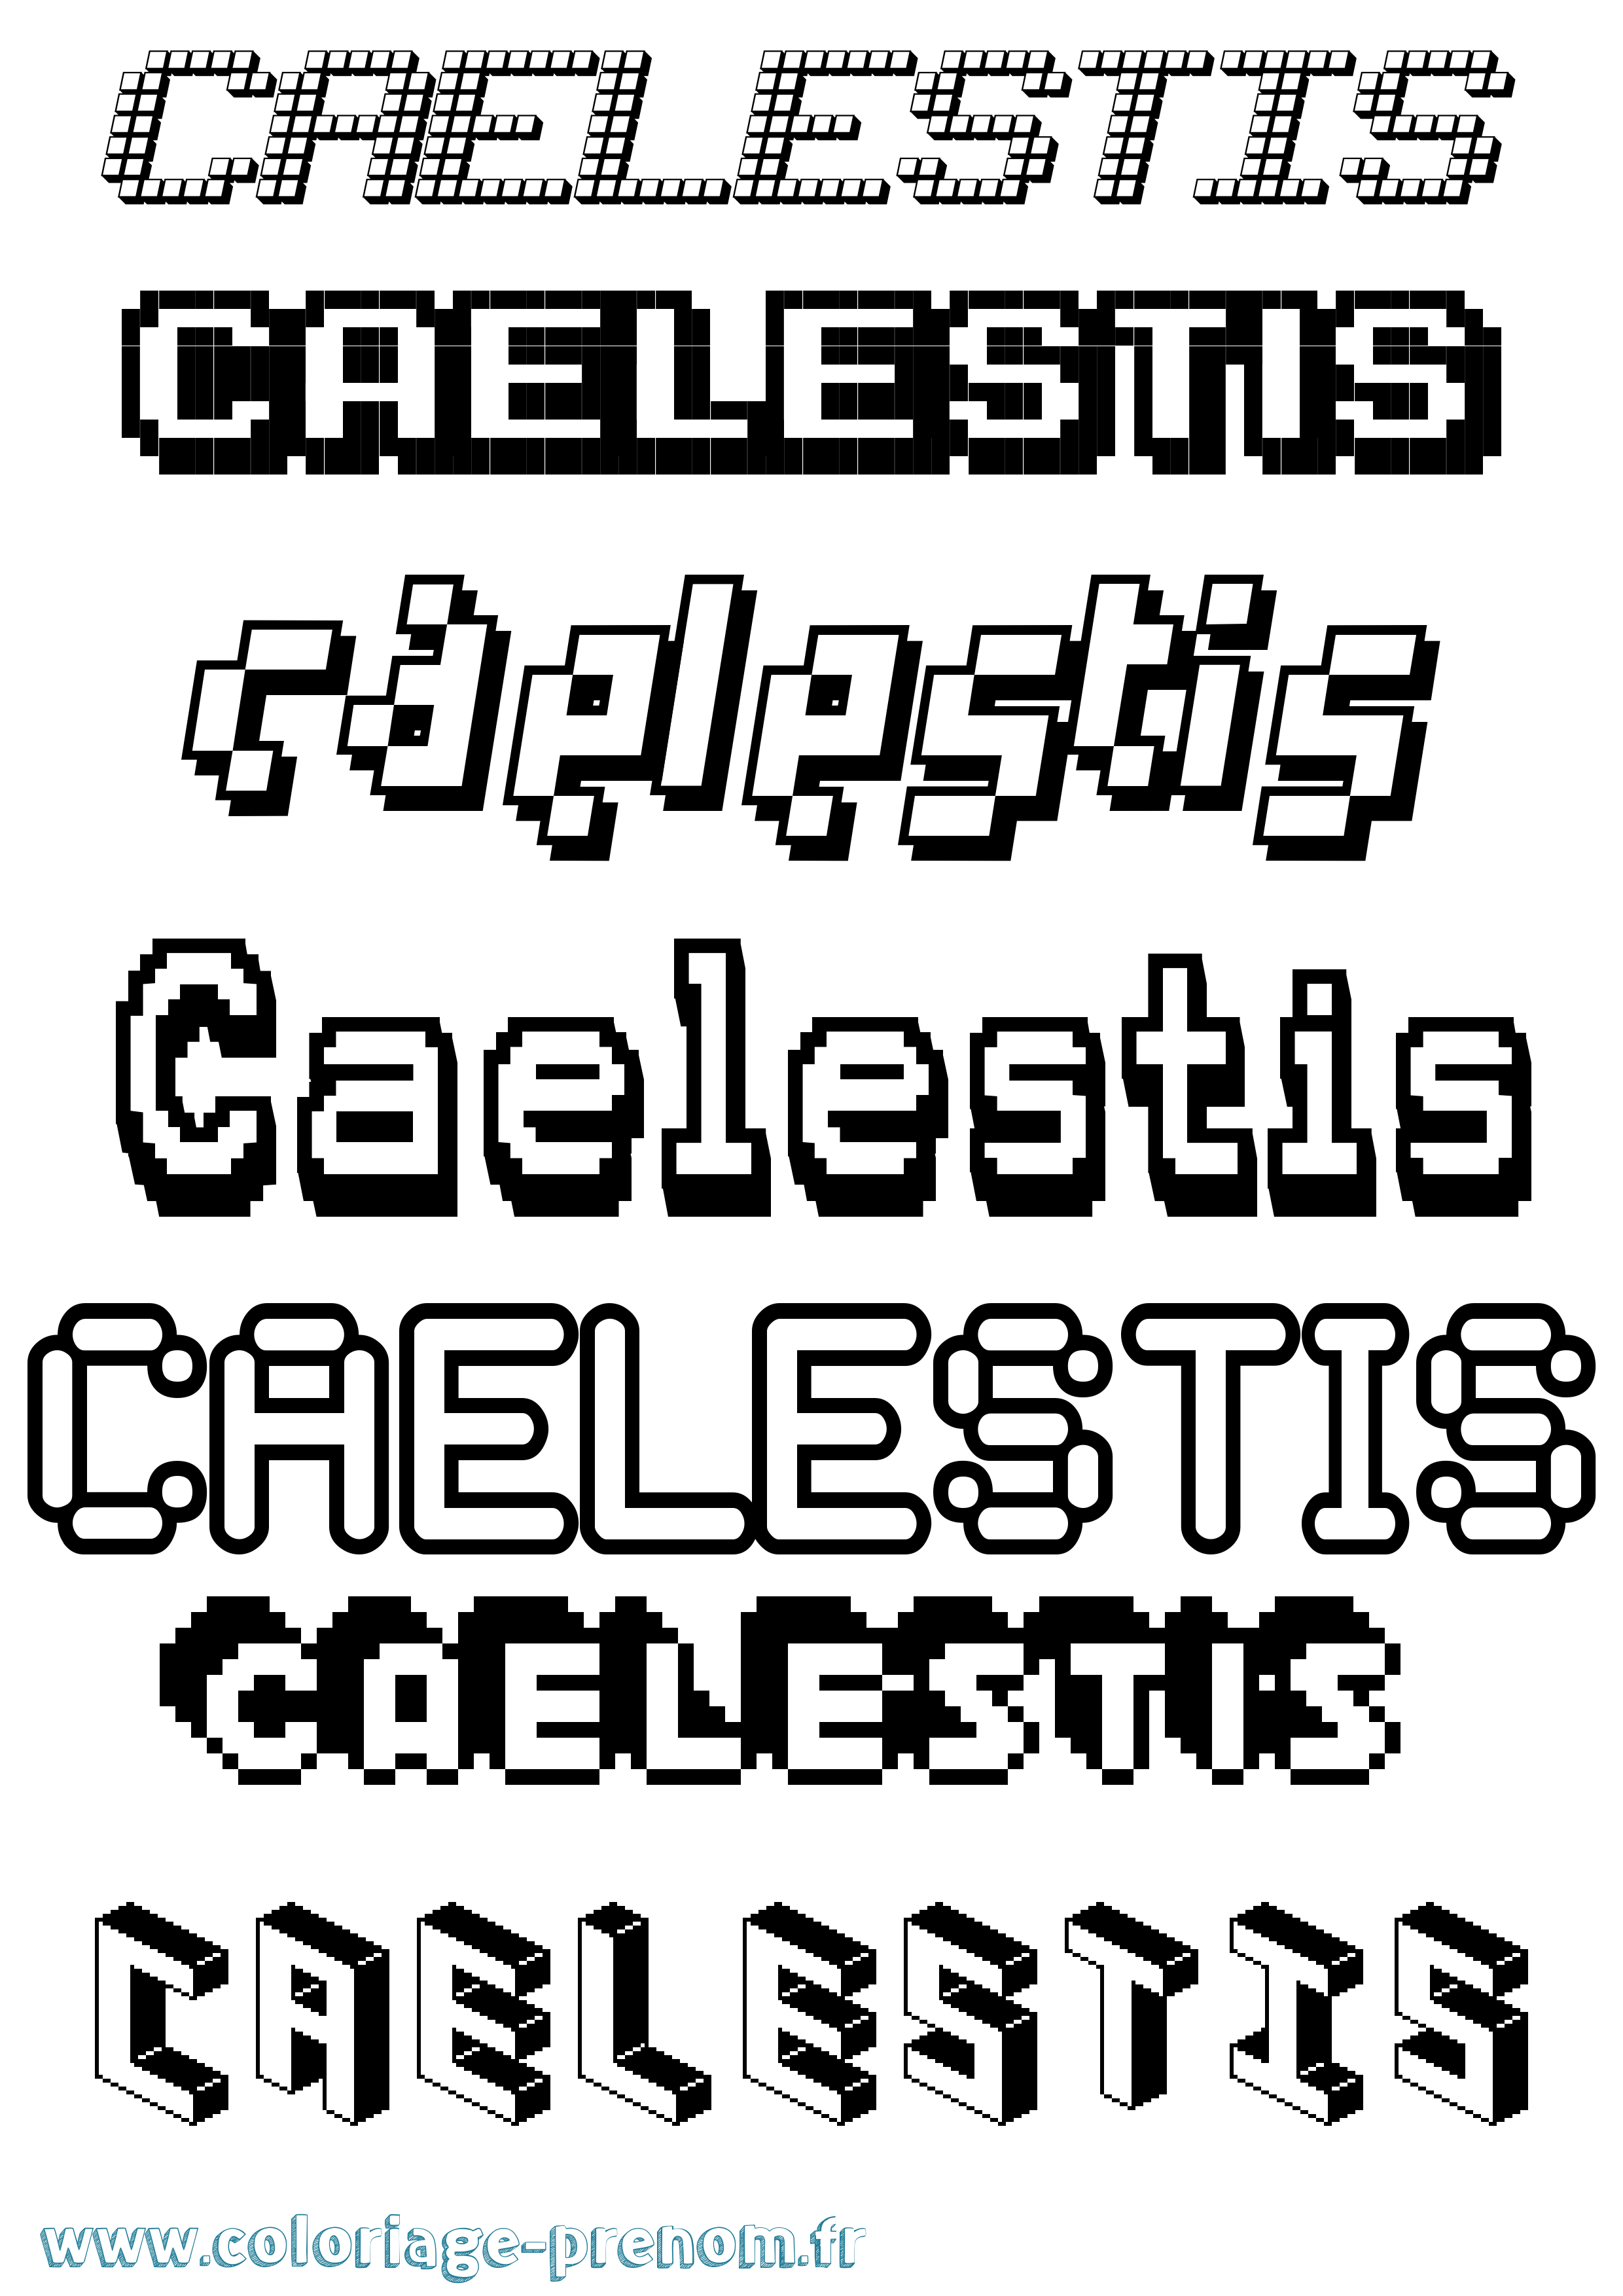 Coloriage prénom Caelestis Pixel